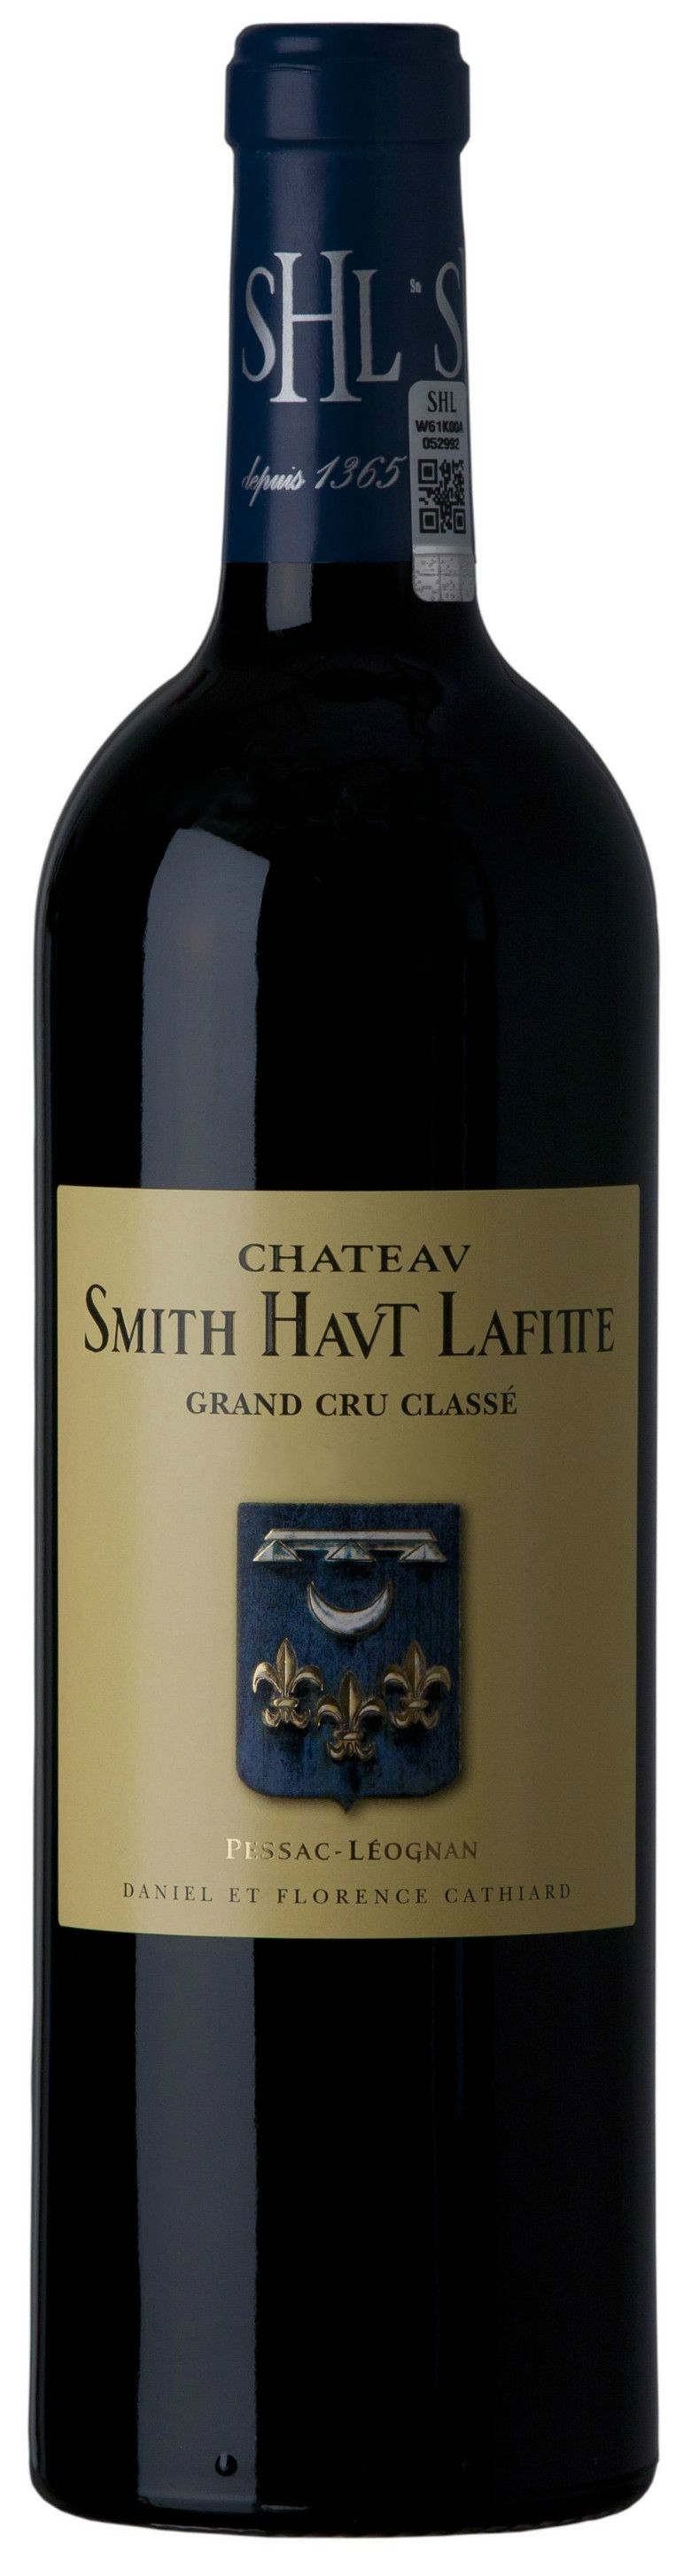 Chateau Smith Haut Lafitte, 2008